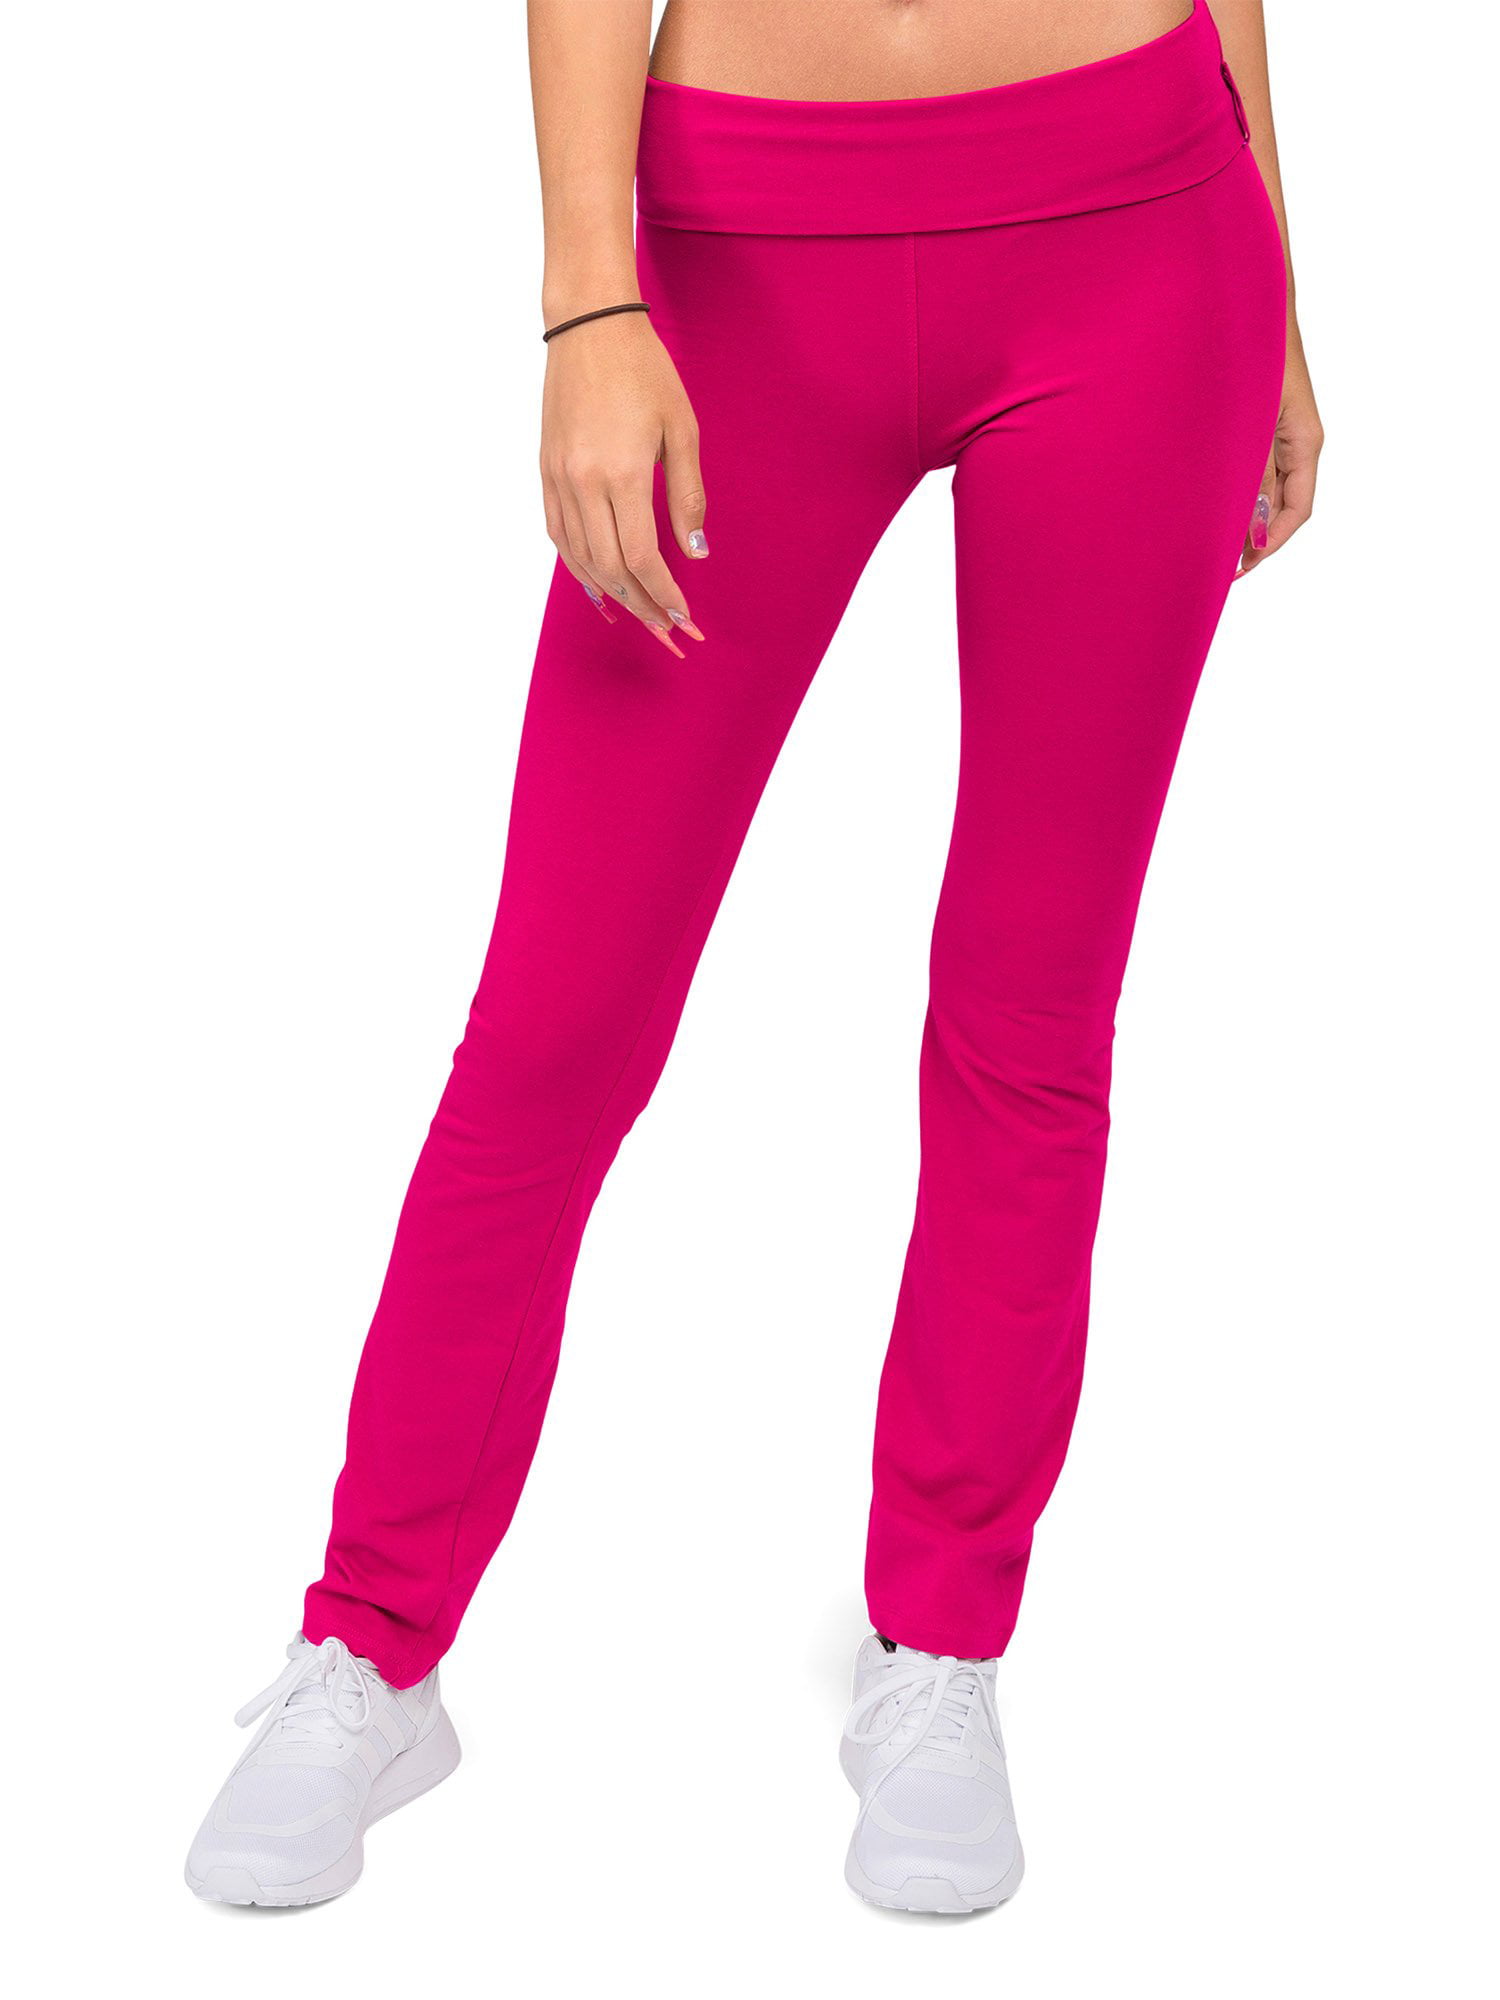 G-Style USA Women's Bootcut Flare Leggings Yoga Pants 8150 - Hot Pink -  Medium 